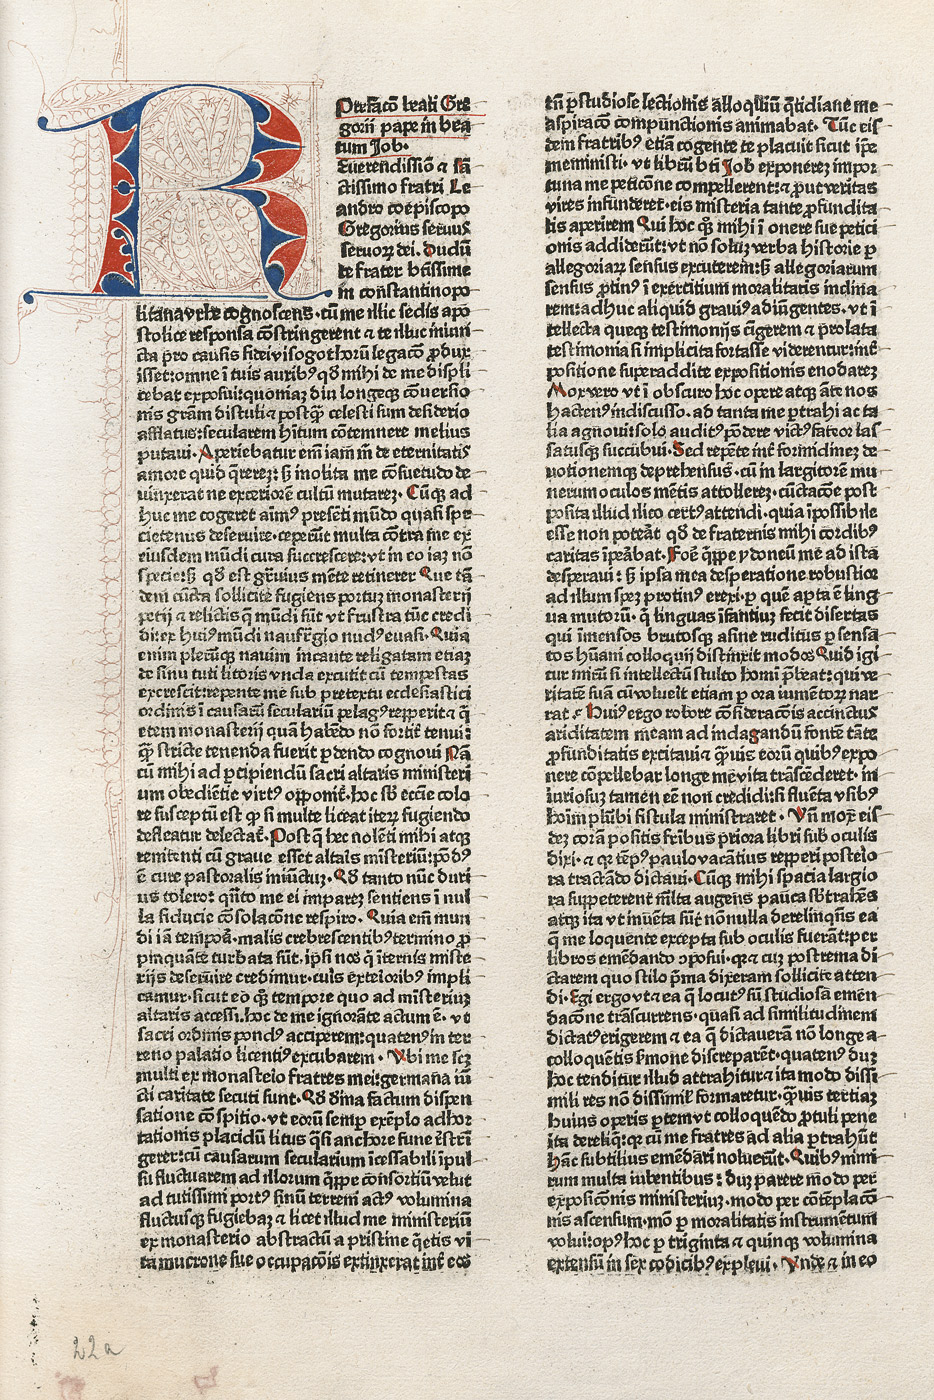 Lot 1023, Auction  115, Gregor I., Papst, Moralia in Job